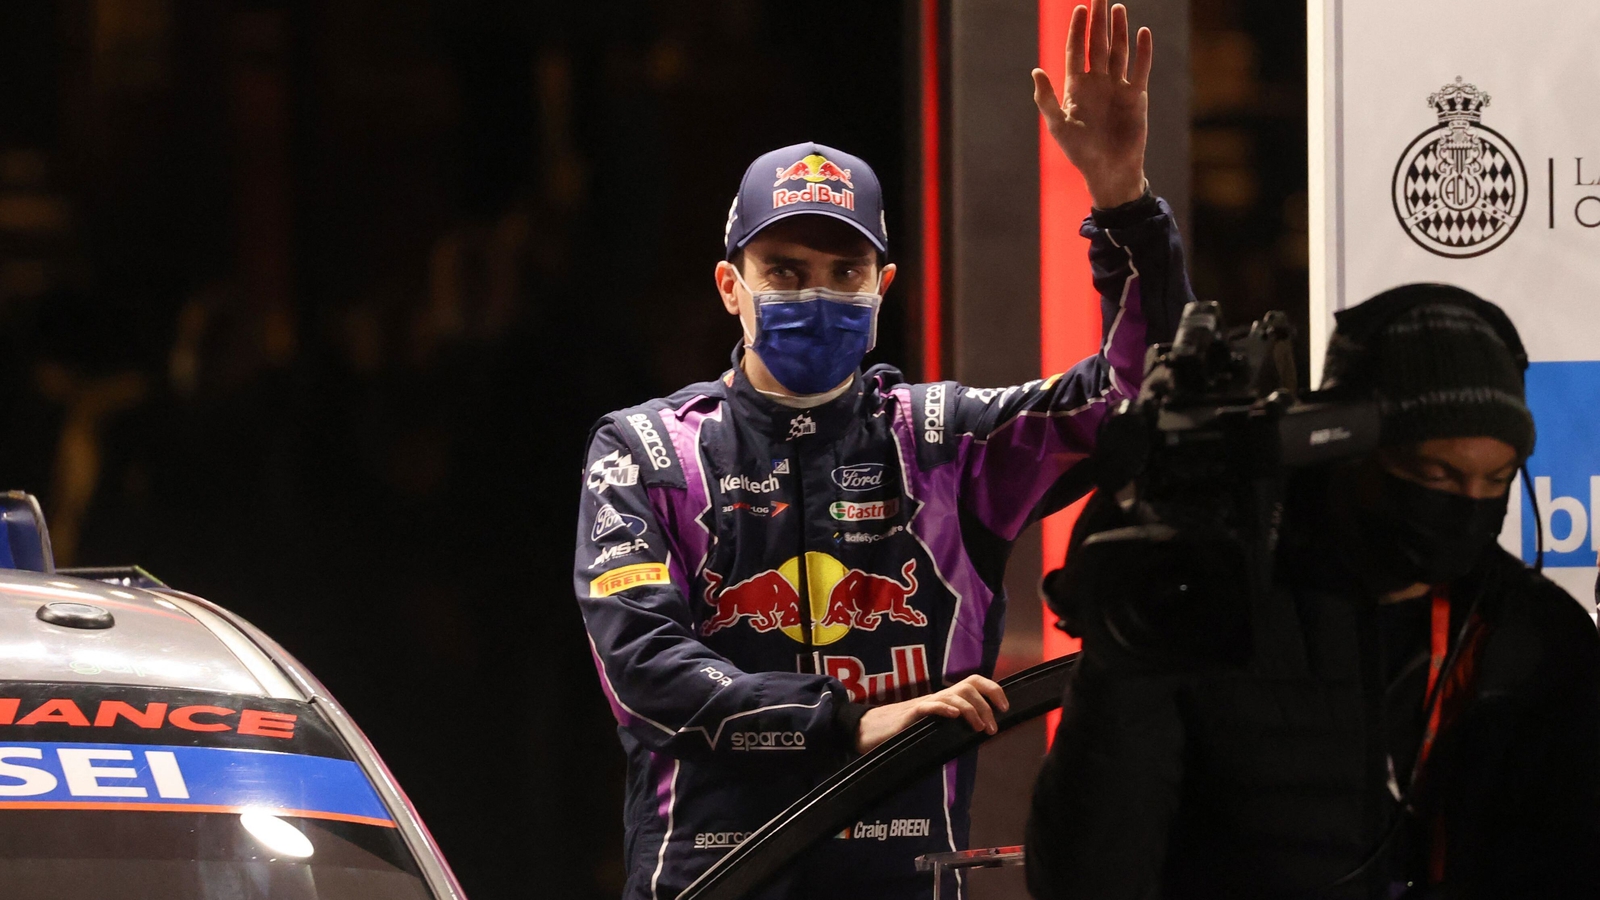 Sébastien Loeb Becomes Oldest Winner of a WRC Rally